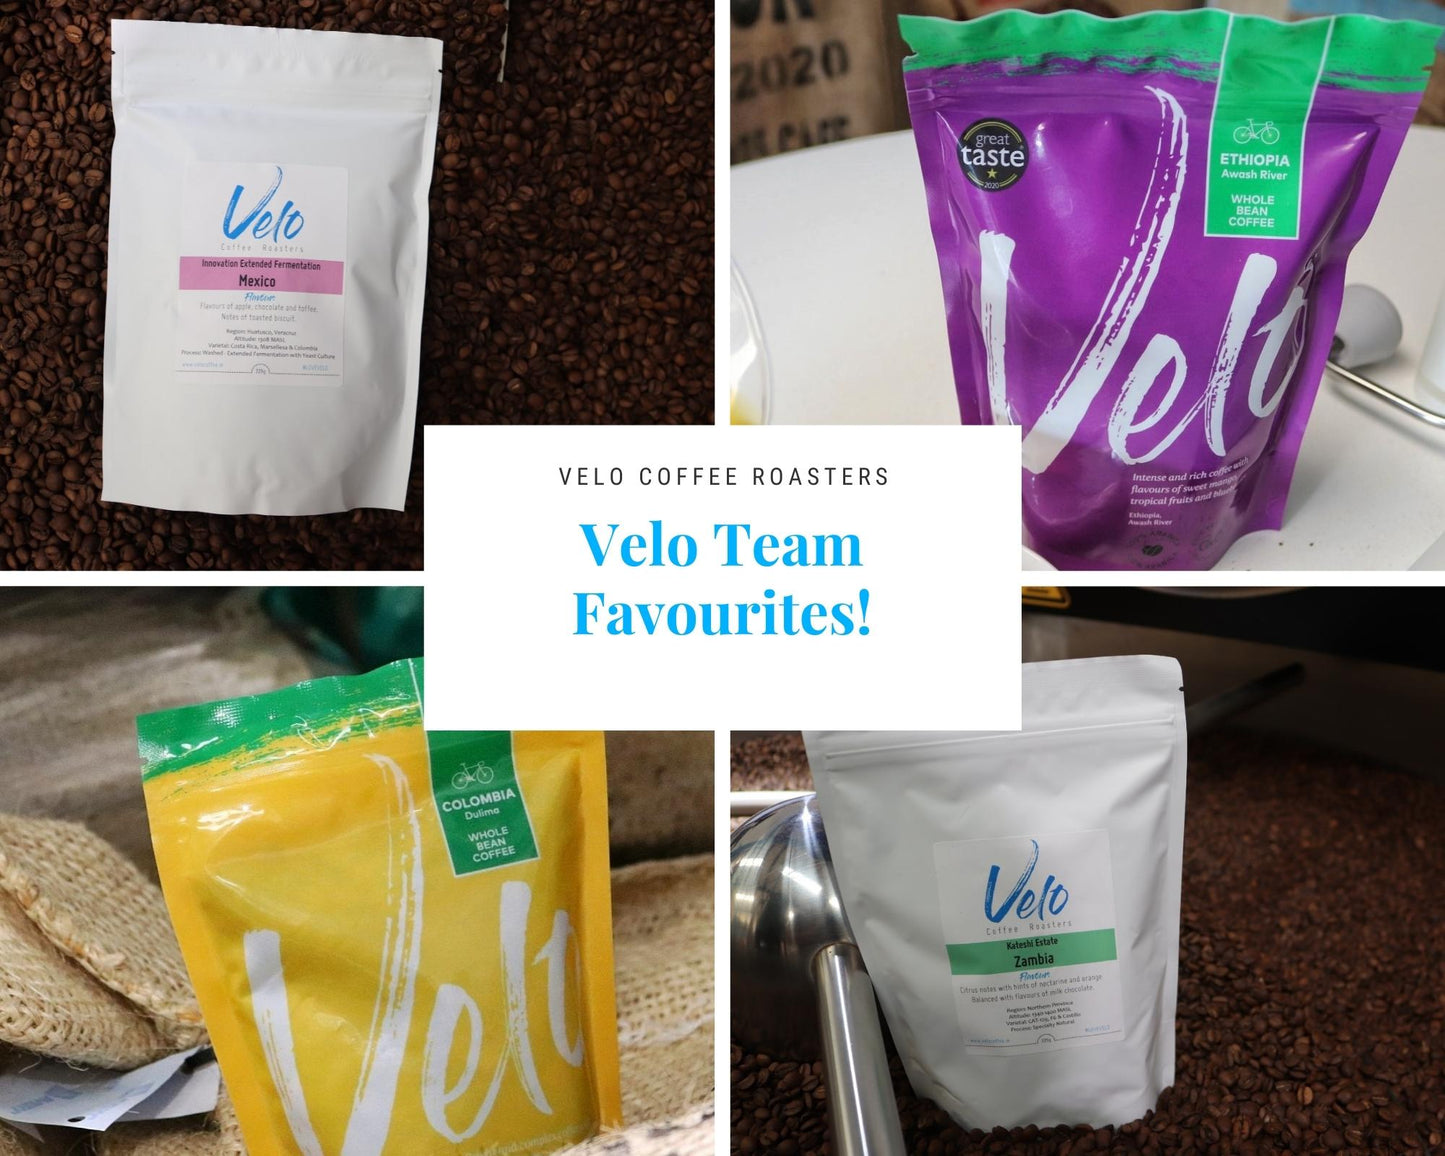 Velo Team Favourites! - Velo Coffee Roasters